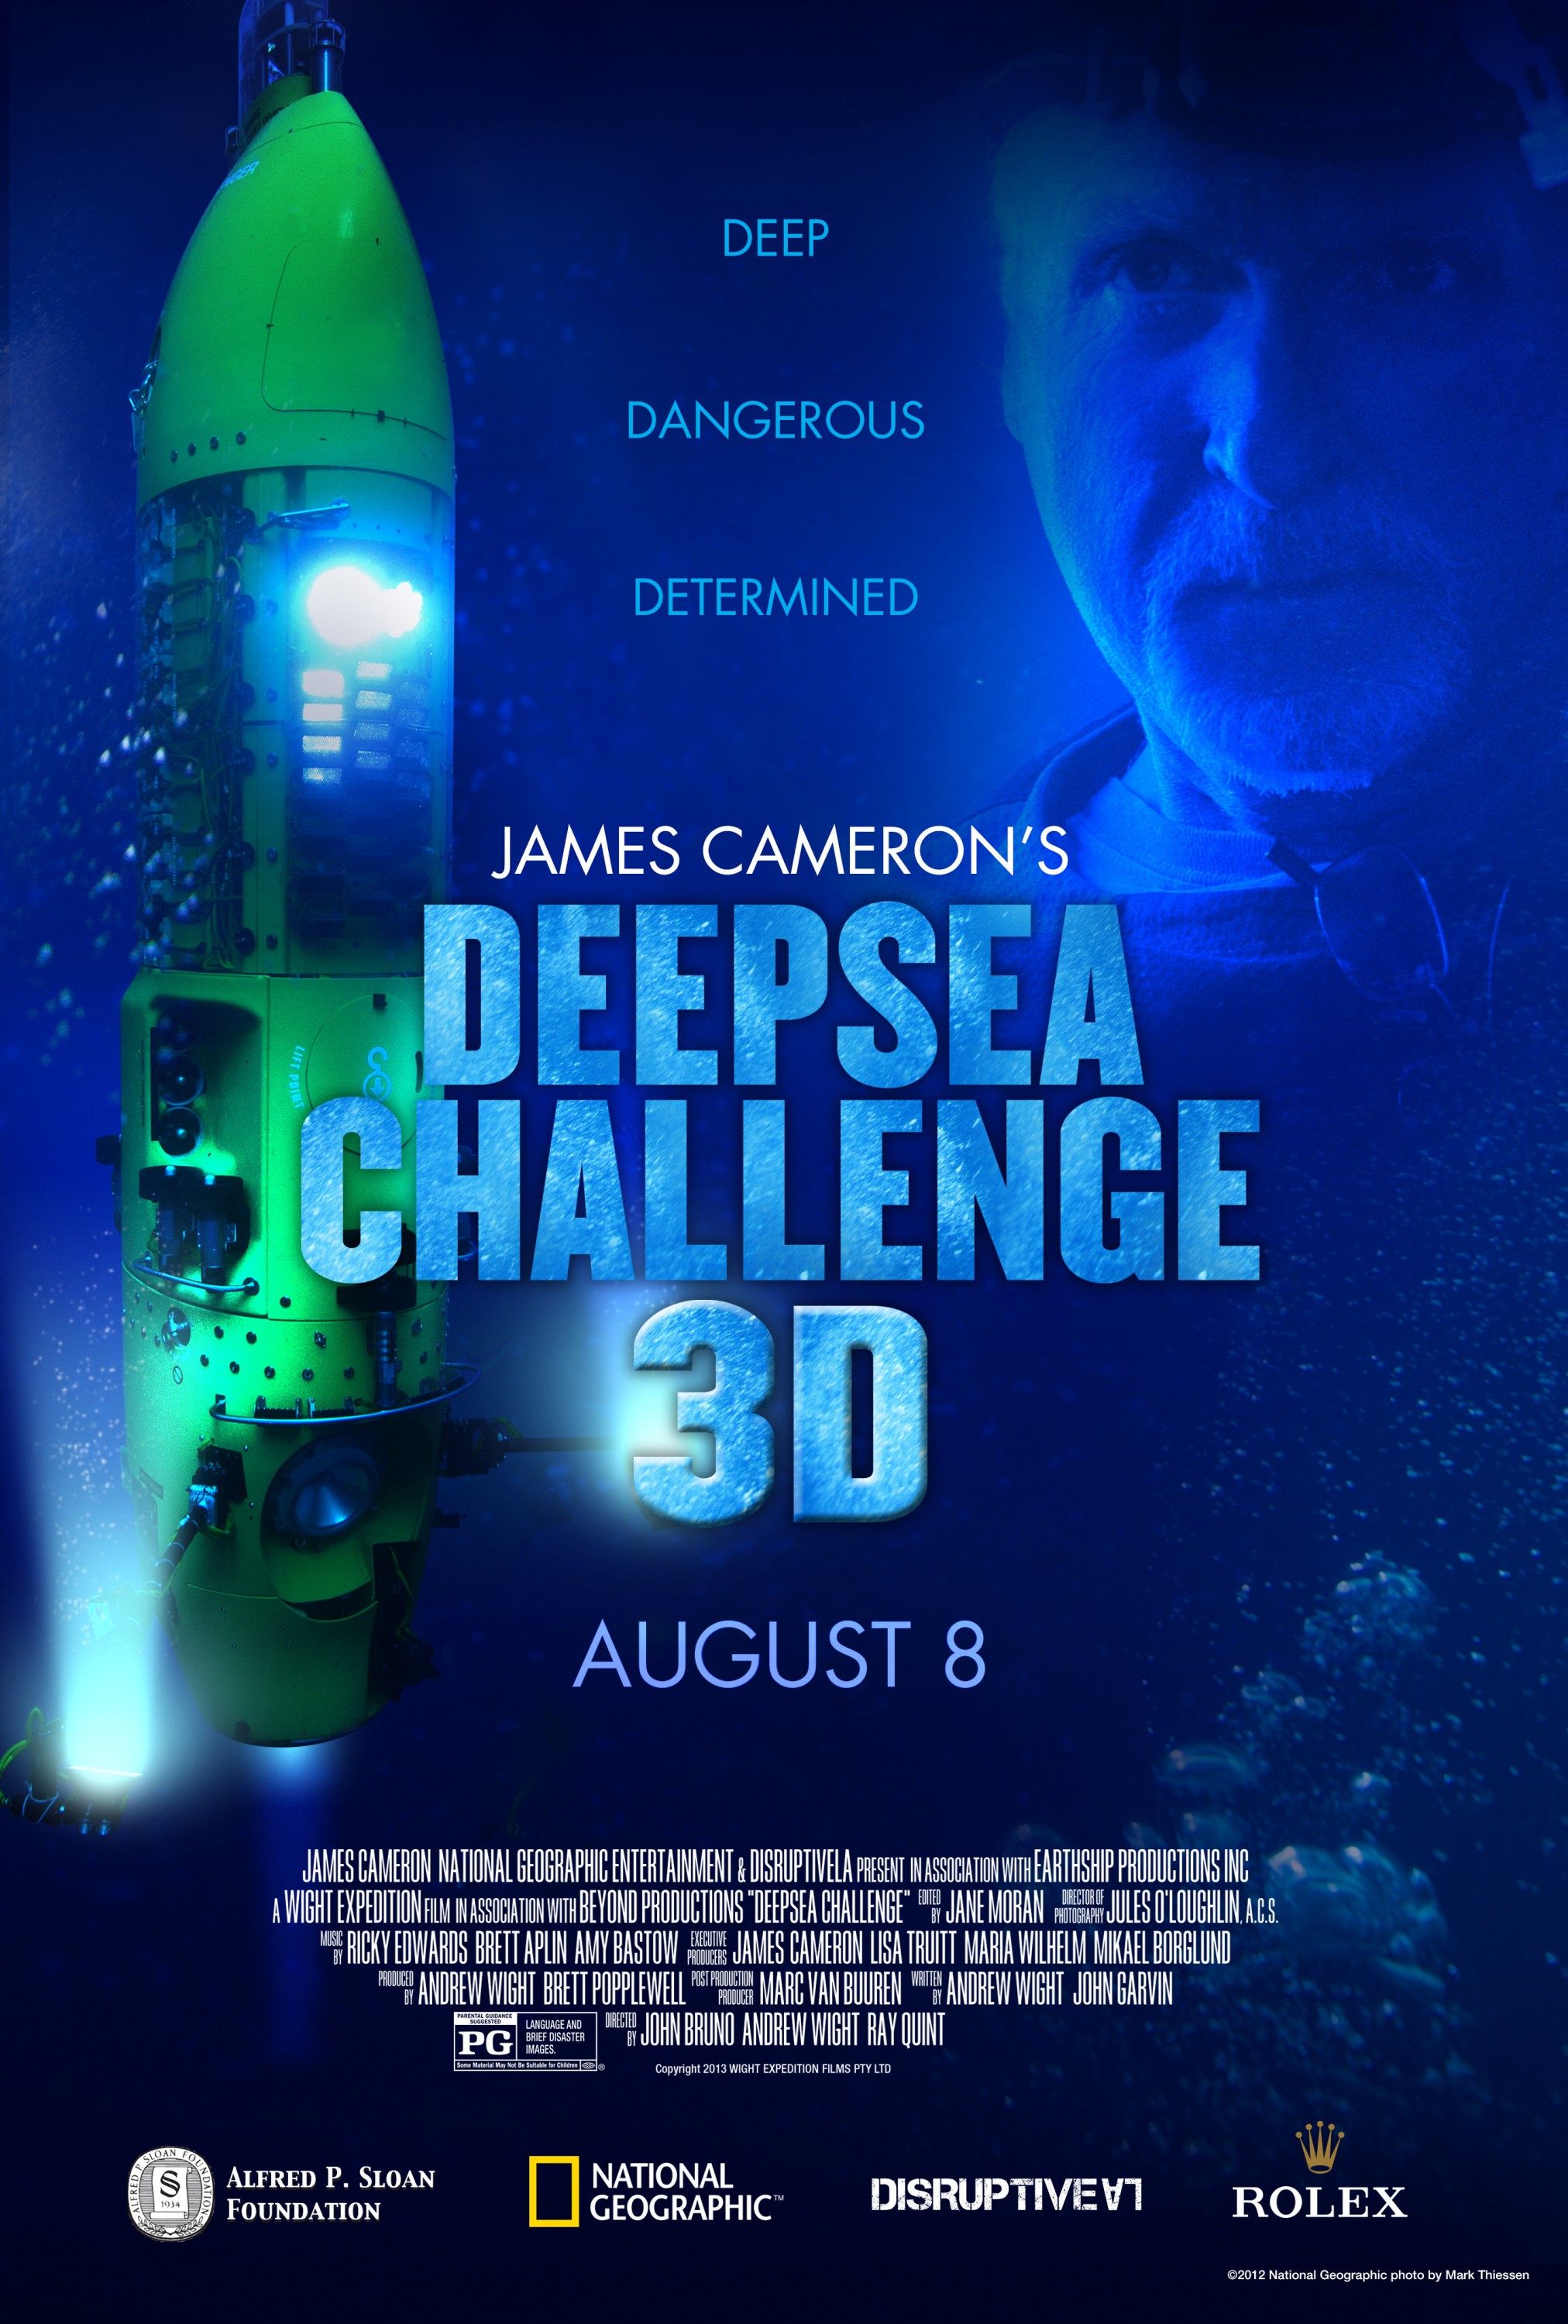 Mega Sized Movie Poster Image for James Cameron's Deepsea Challenge 3D 